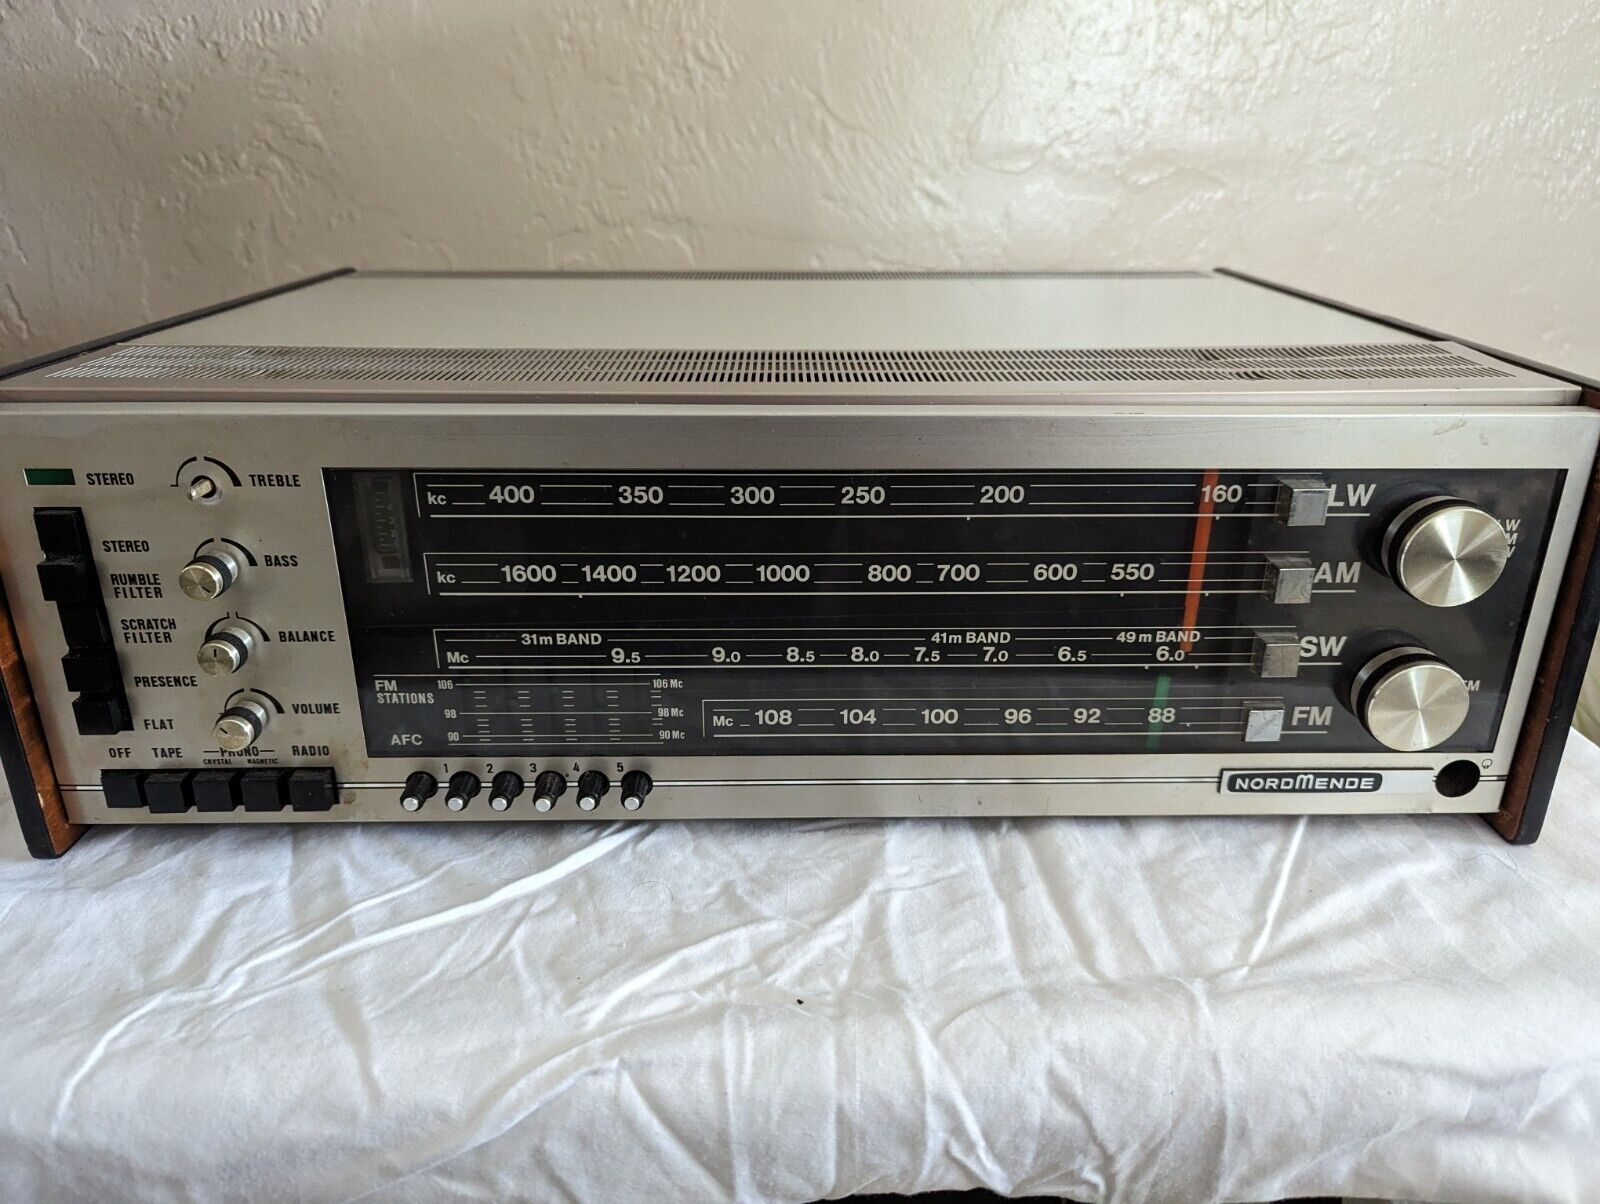 Vintage NordMende HiFi 8001/ST-C Rare High End Stereo Receiver AM/FM/SW/LW